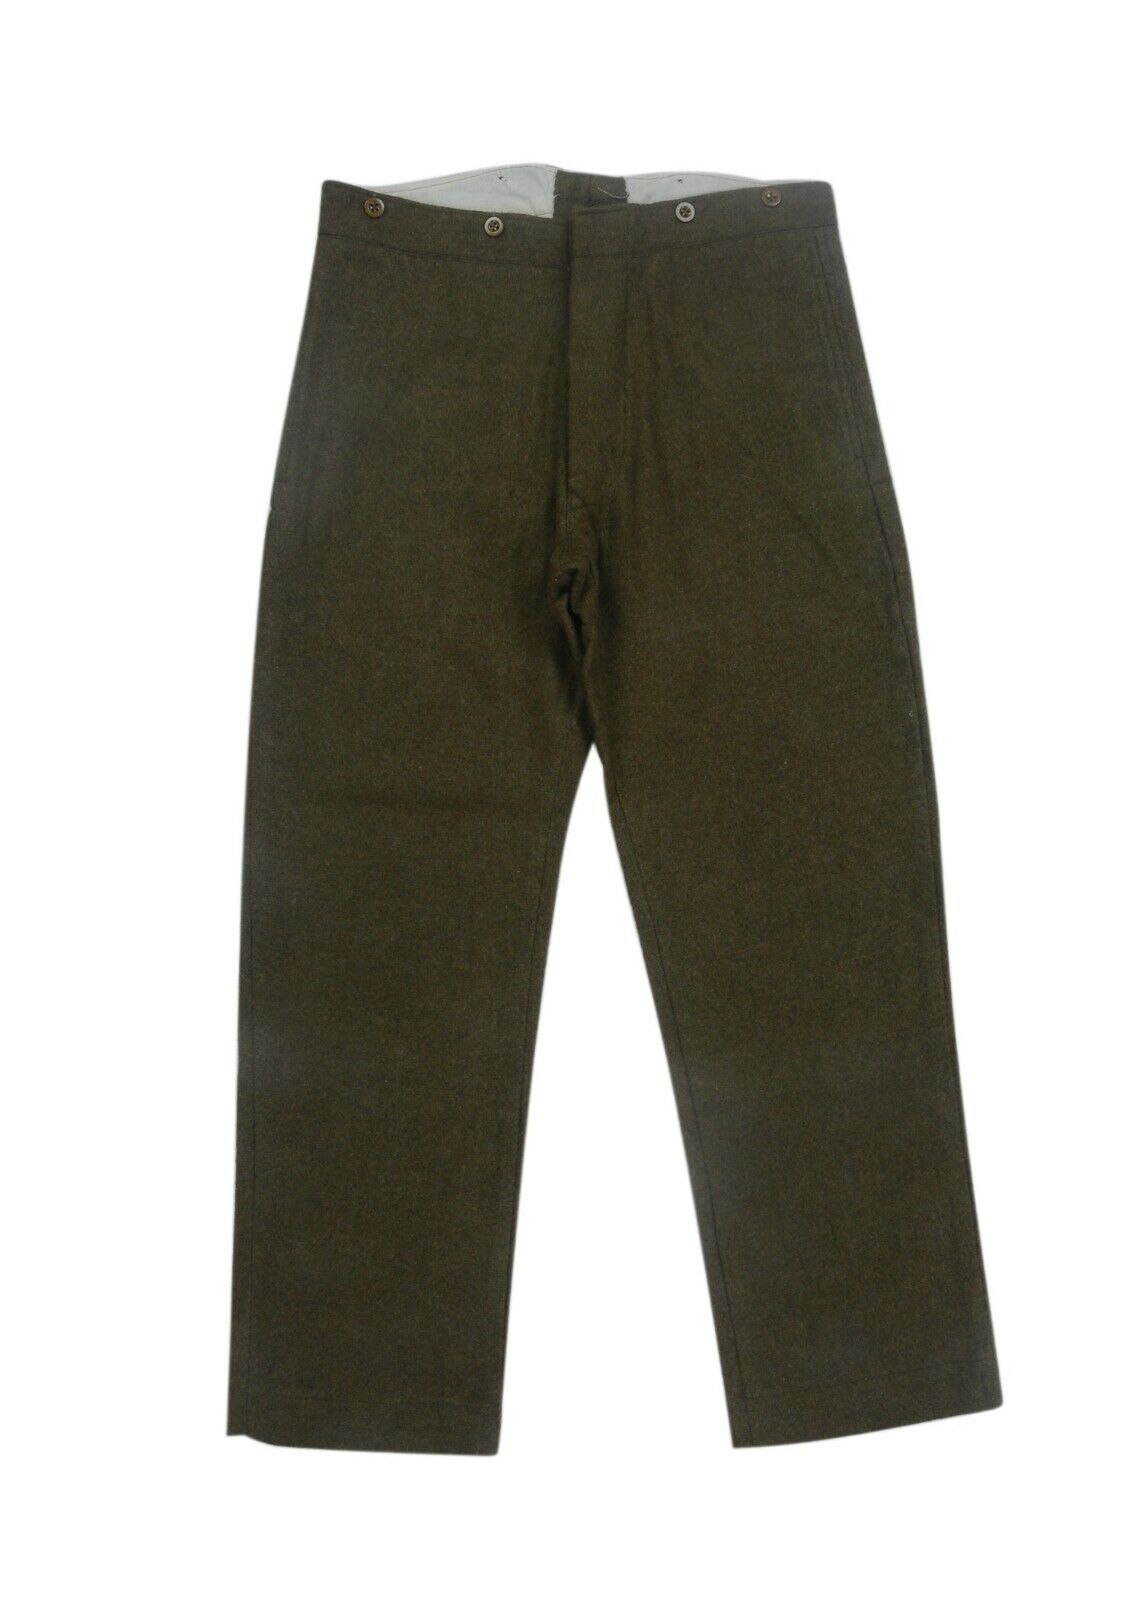 Repro WW1 British Military 1902 Service Dress SD Uniform Trousers (44 Inches)